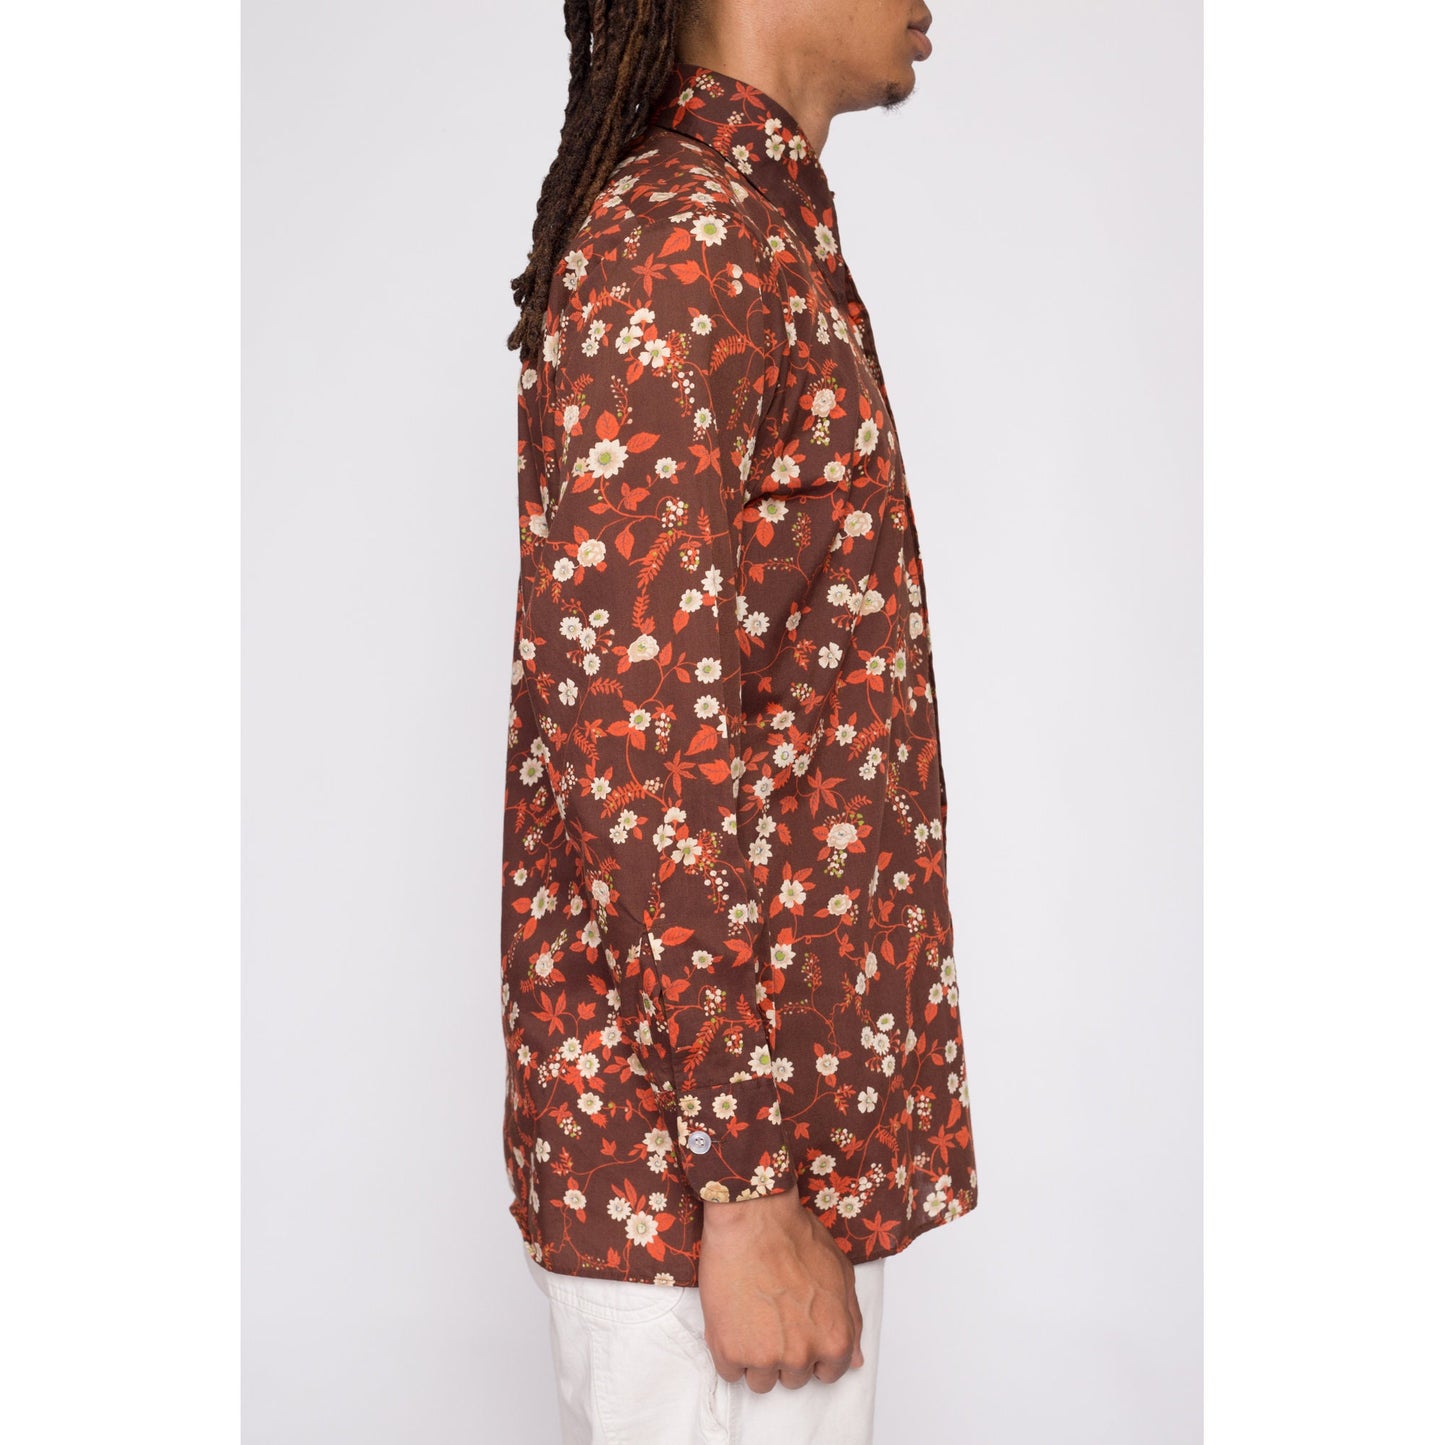 70s Brown Floral & Leaf Print Collared Shirt - Men's Medium | Retro Vintage Long Sleeve Button Down Disco Top